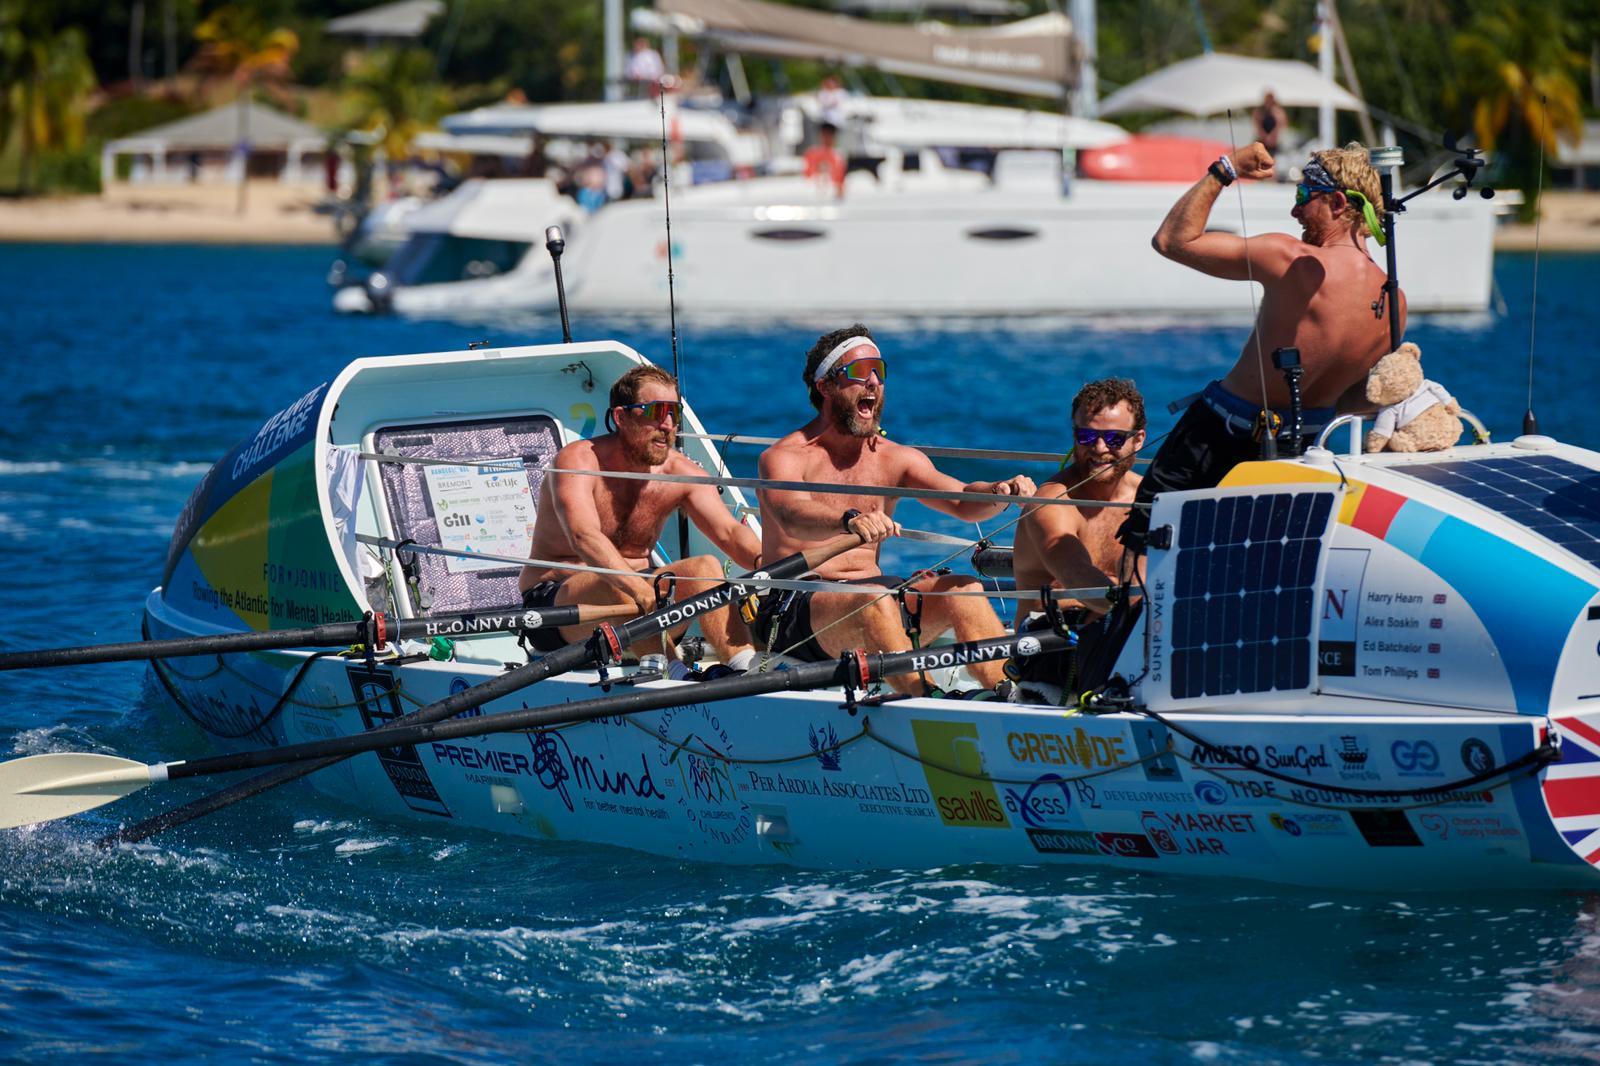 Oardacity rowed 3,000 miles across the Atlantic